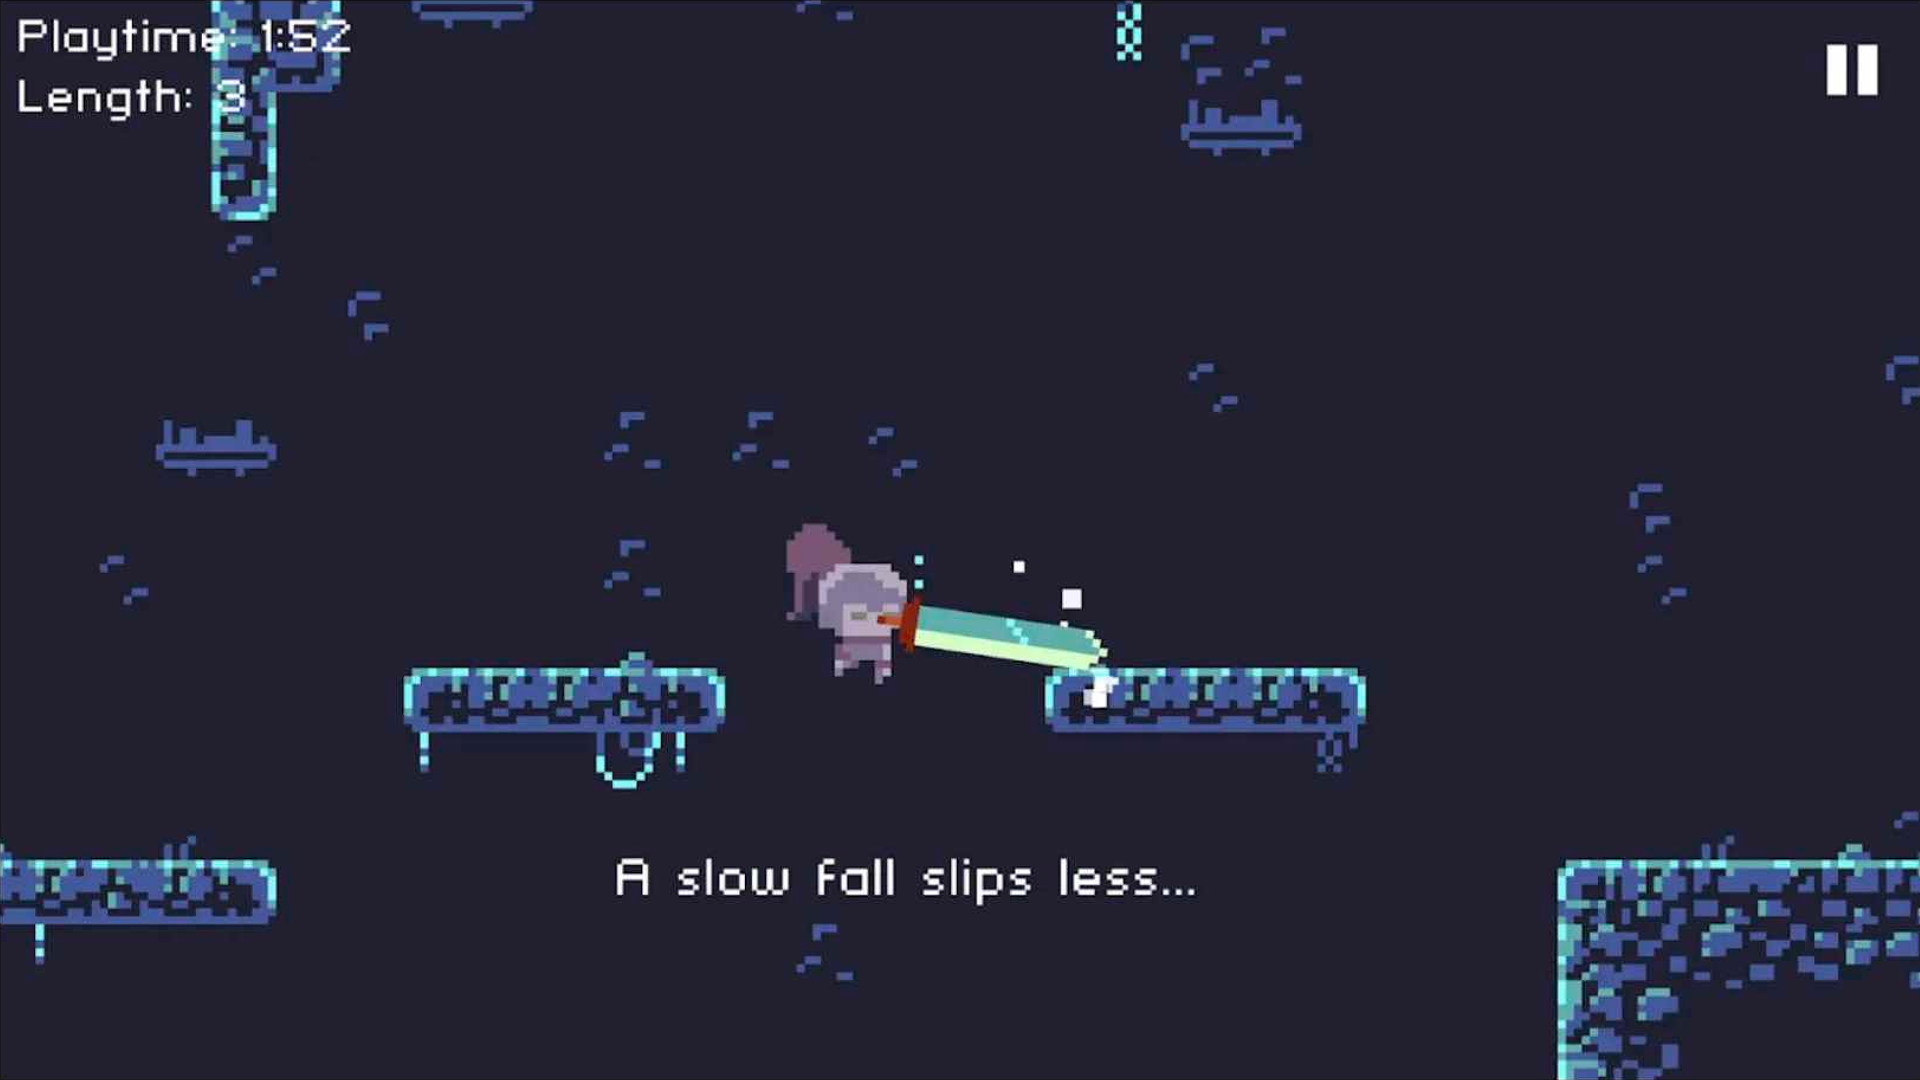 Screenshot of Deepest Sword